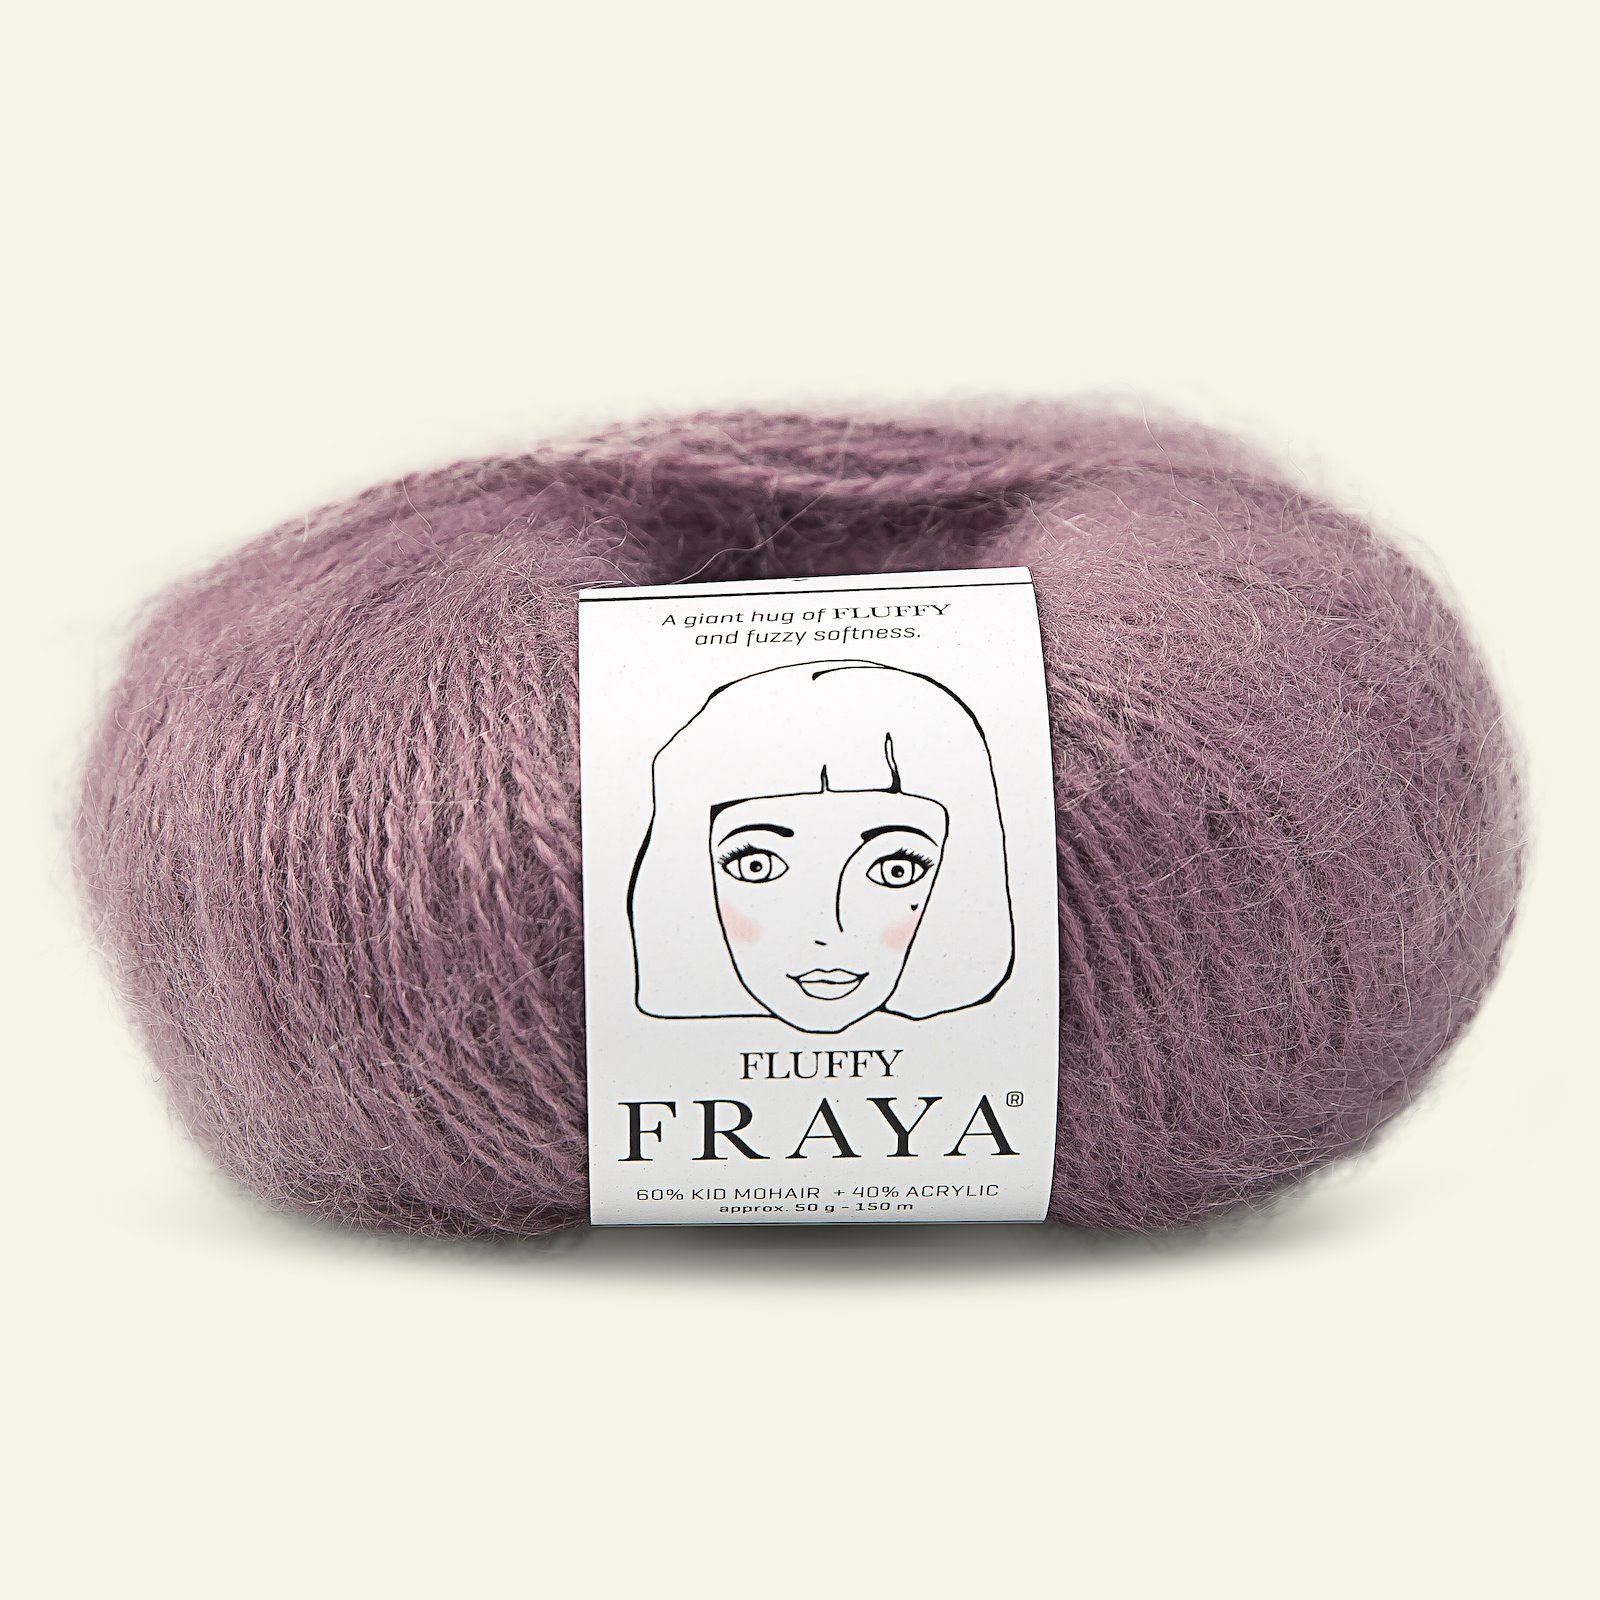 FRAYA, kid mohair mixed yarn "Fluffy", heather 90066378_pack